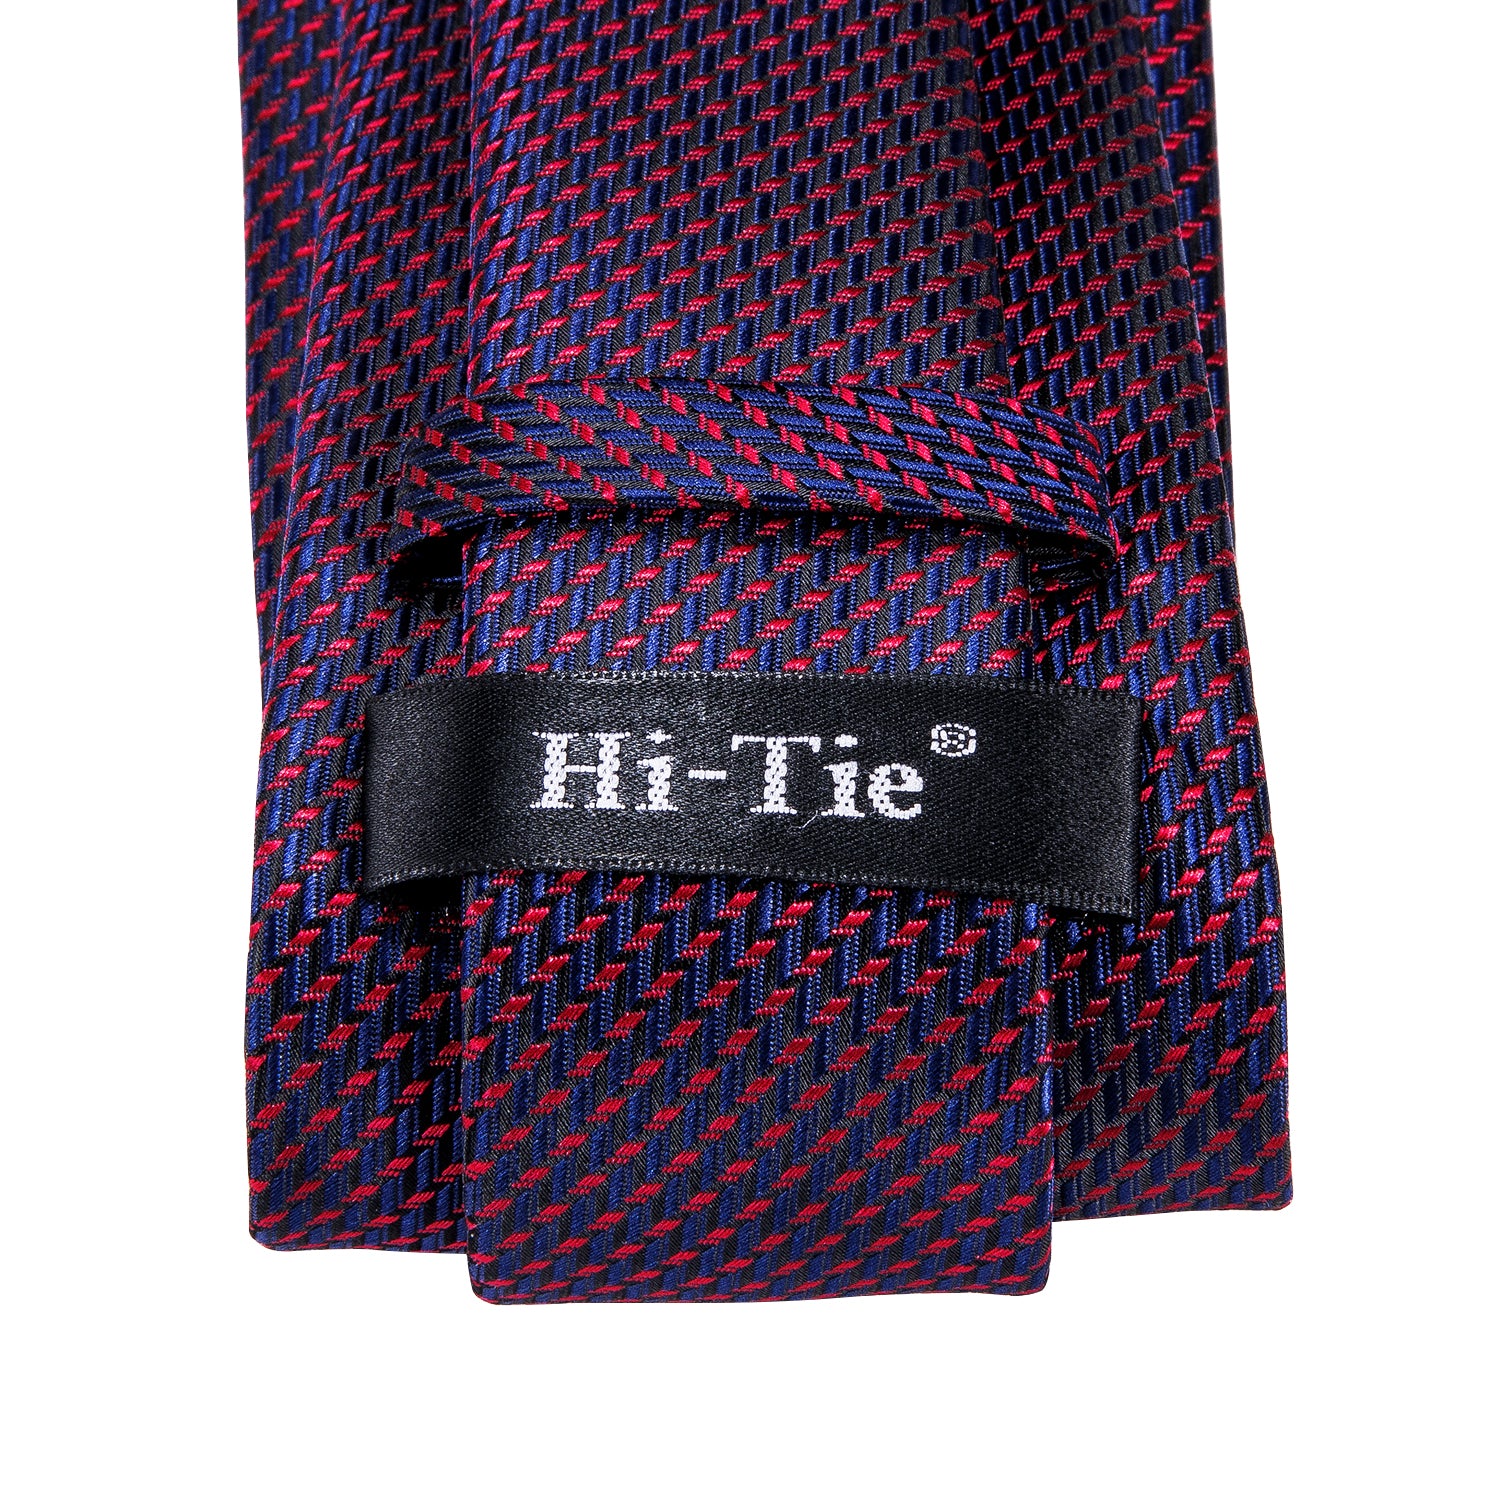 Blue Red Striped Mens Geometric Tie Pocket Square Cufflinks Set